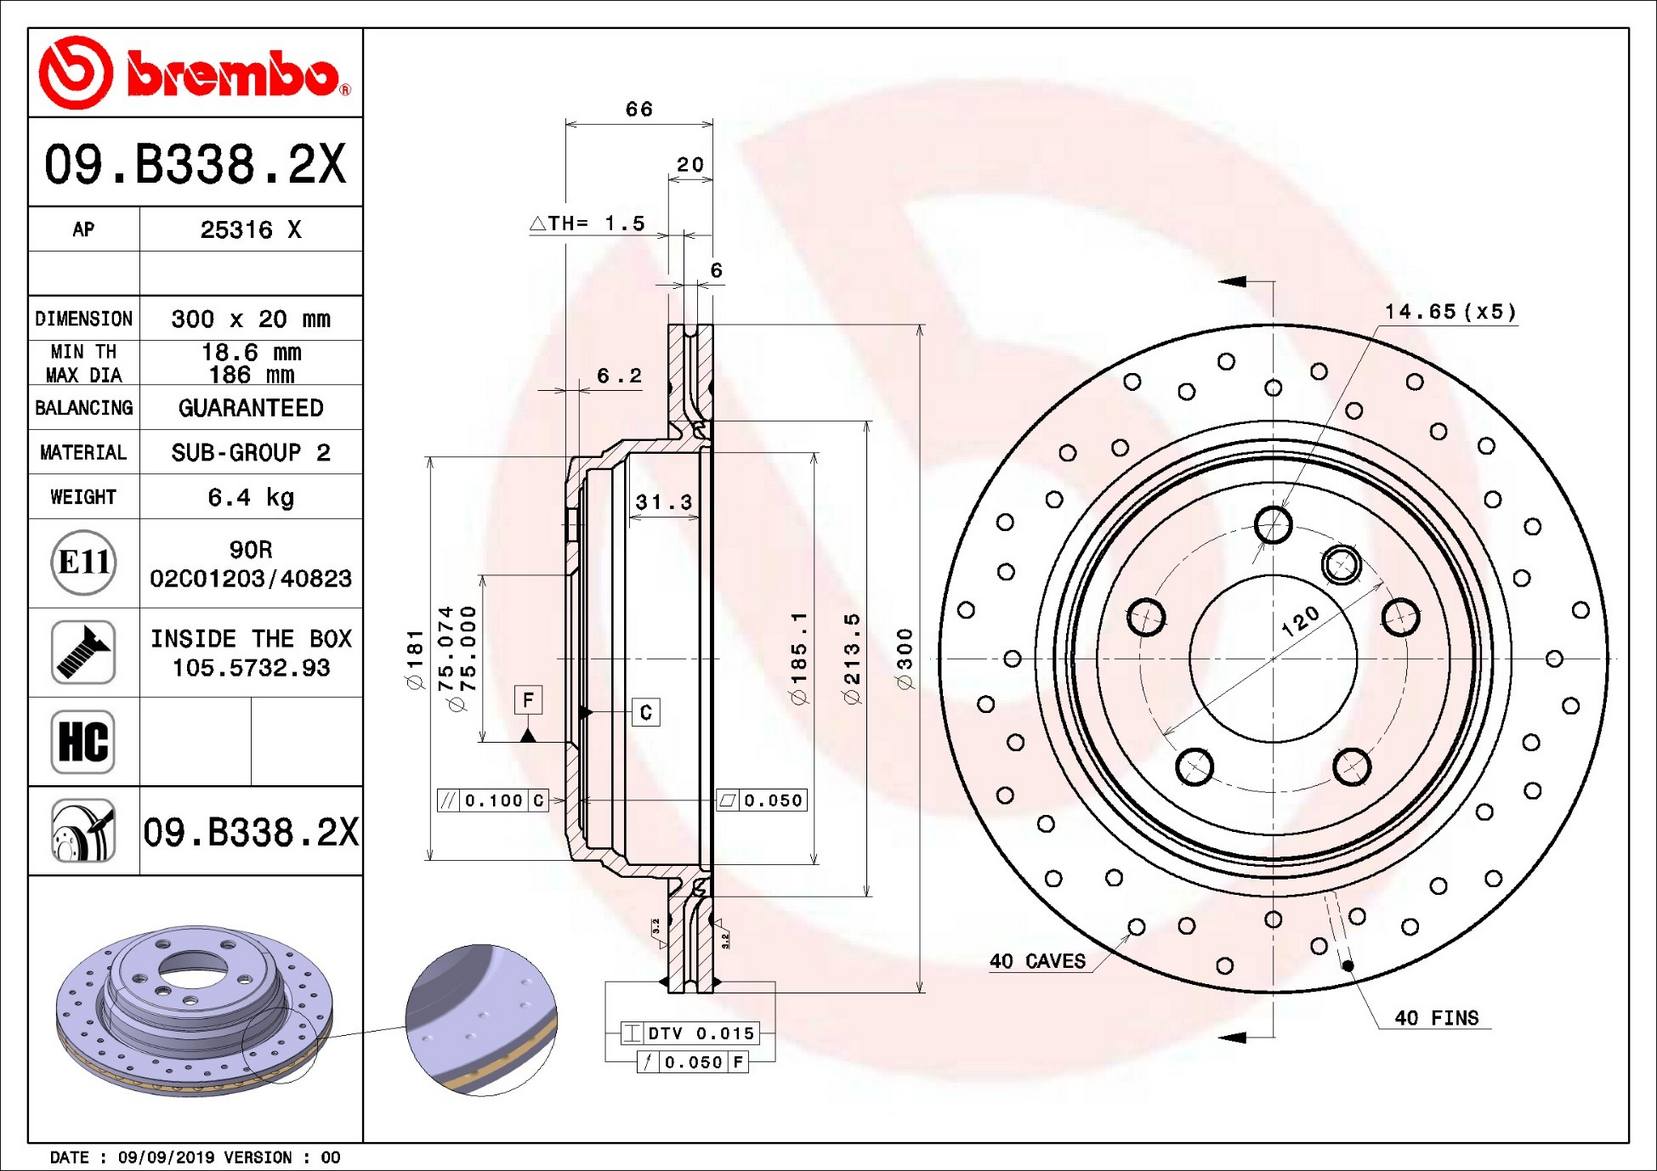 BMW Disc Brake Pad and Rotor Kit - Rear (300mm) (Ceramic) (Xtra) Brembo